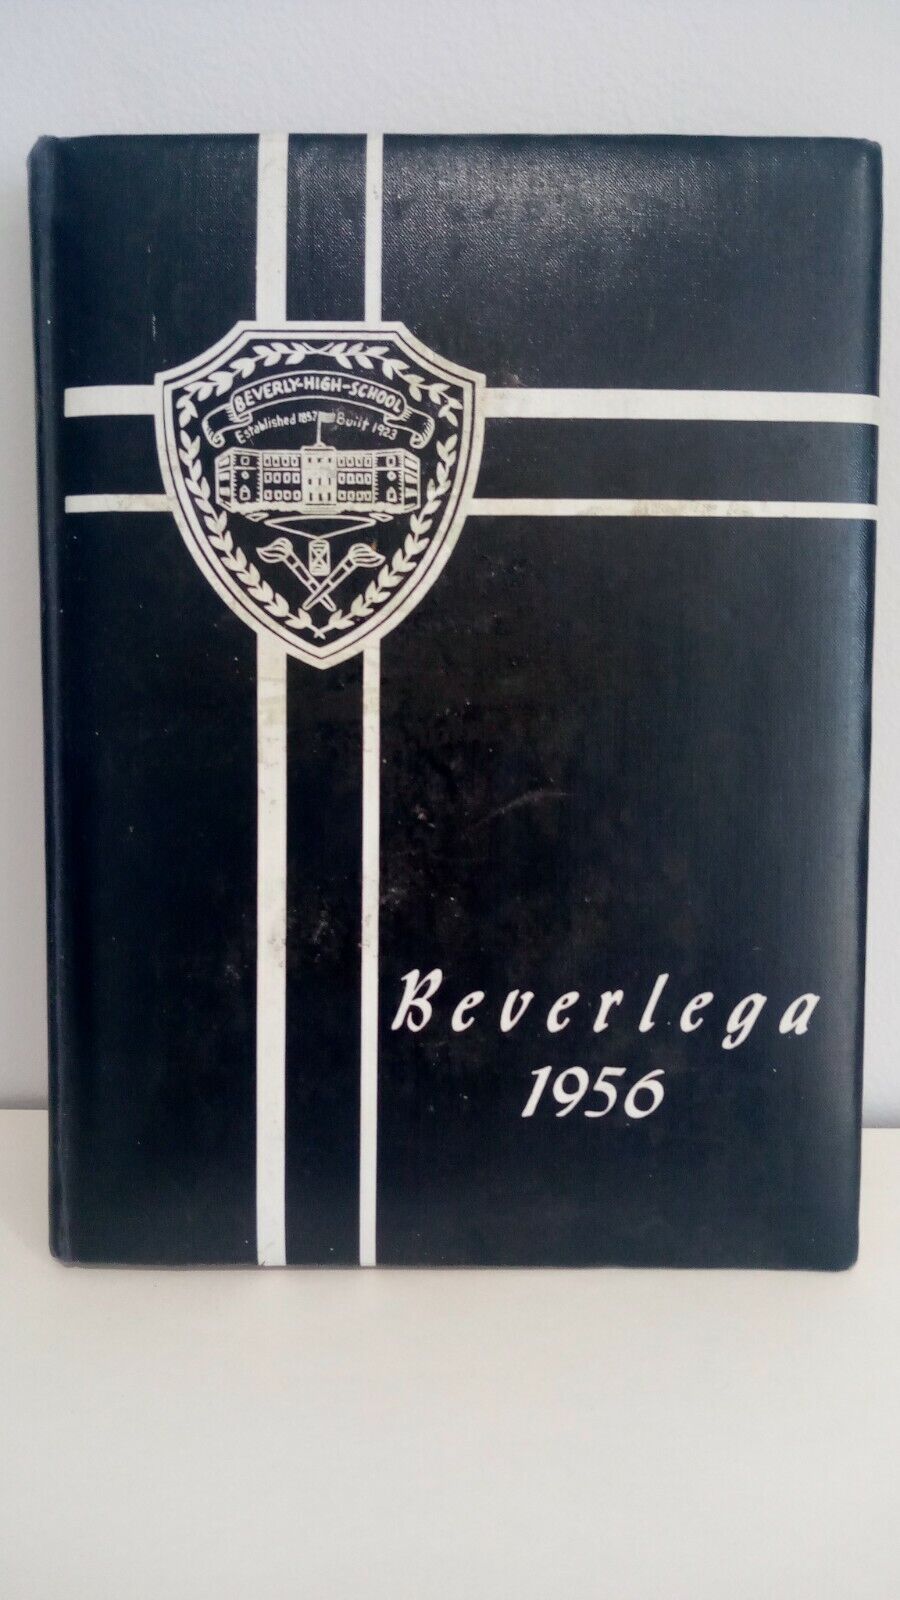 1956 Beverly High School Beverlega High School Yearbook Beverly Massachusetts